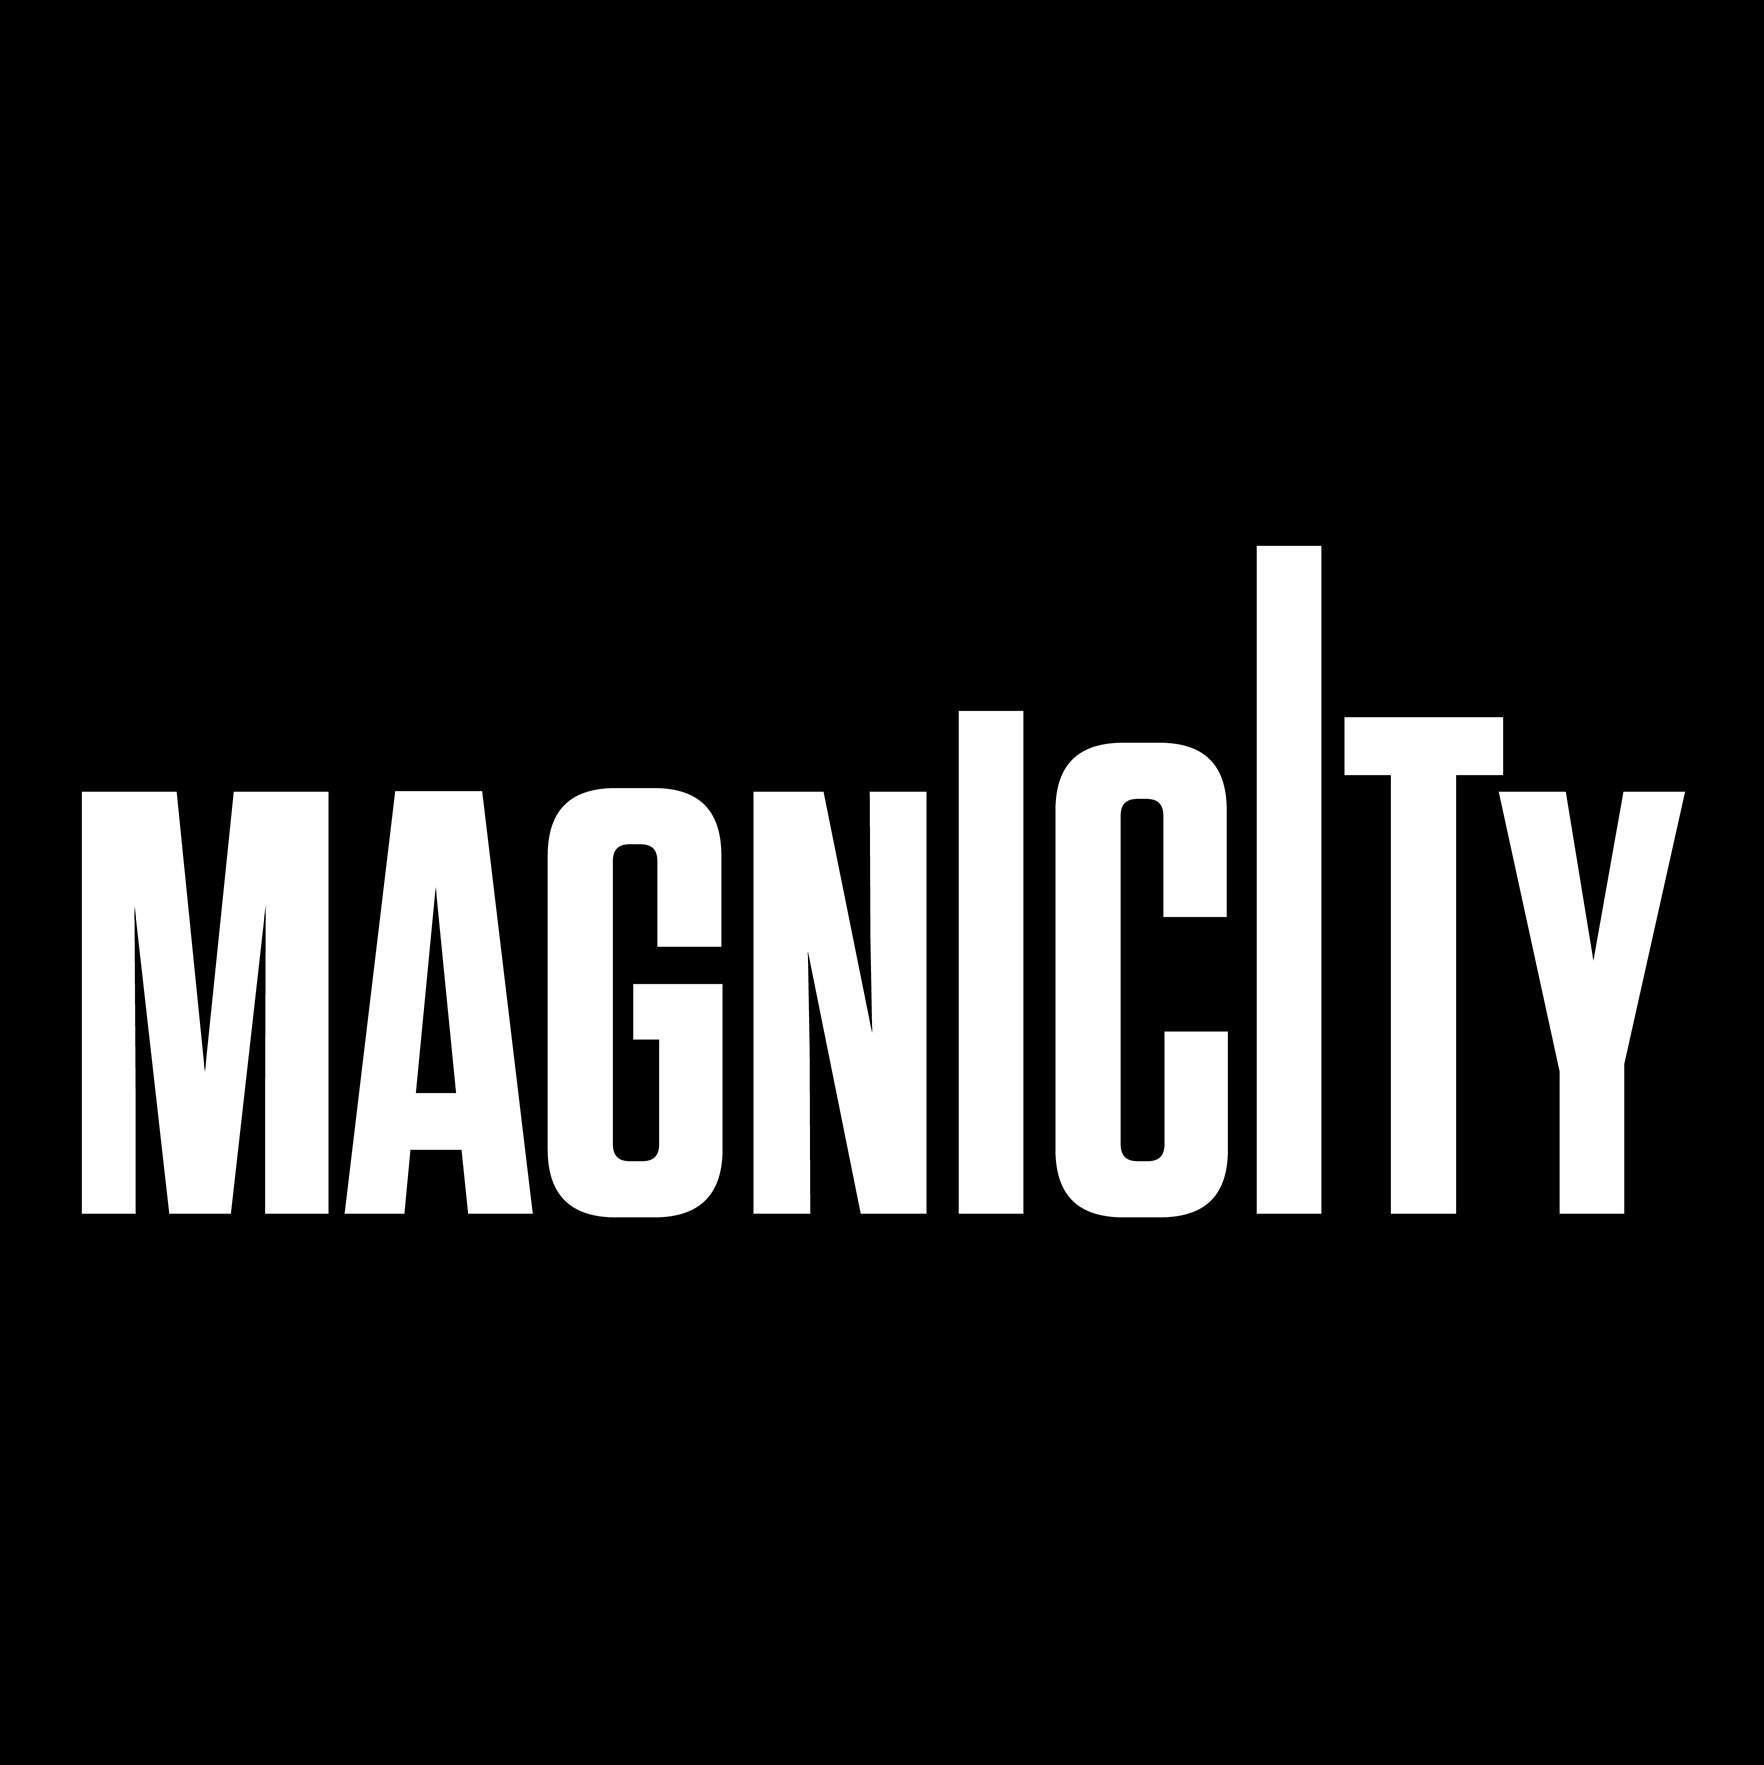 Magnicity